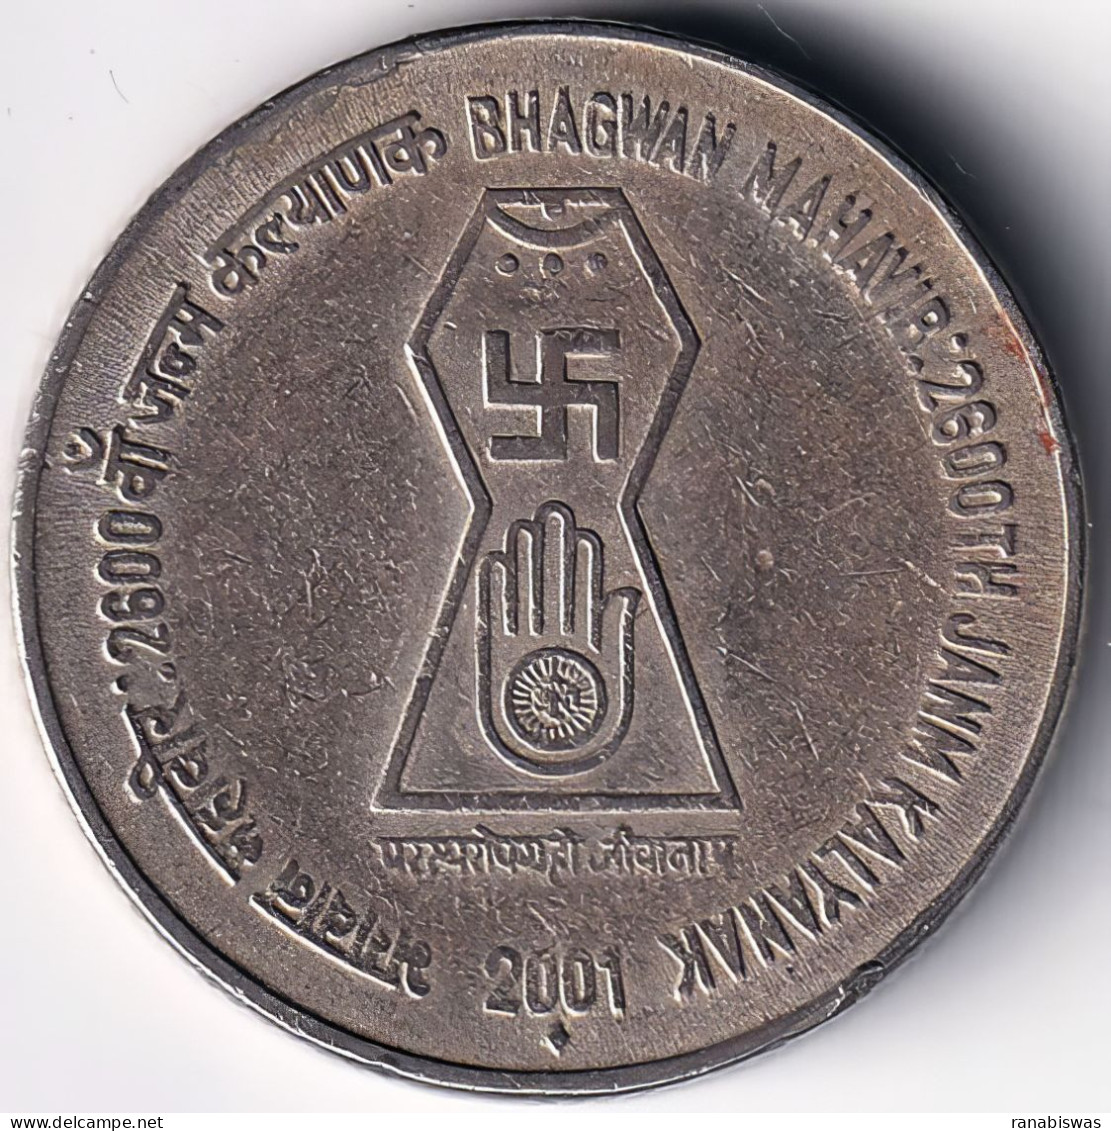 INDIA COIN LOT 132, 5 RUPEES 2001, BHAGAWAN MAHAVIR, BOMBAY MINT, AUNC, SCARE - Indien